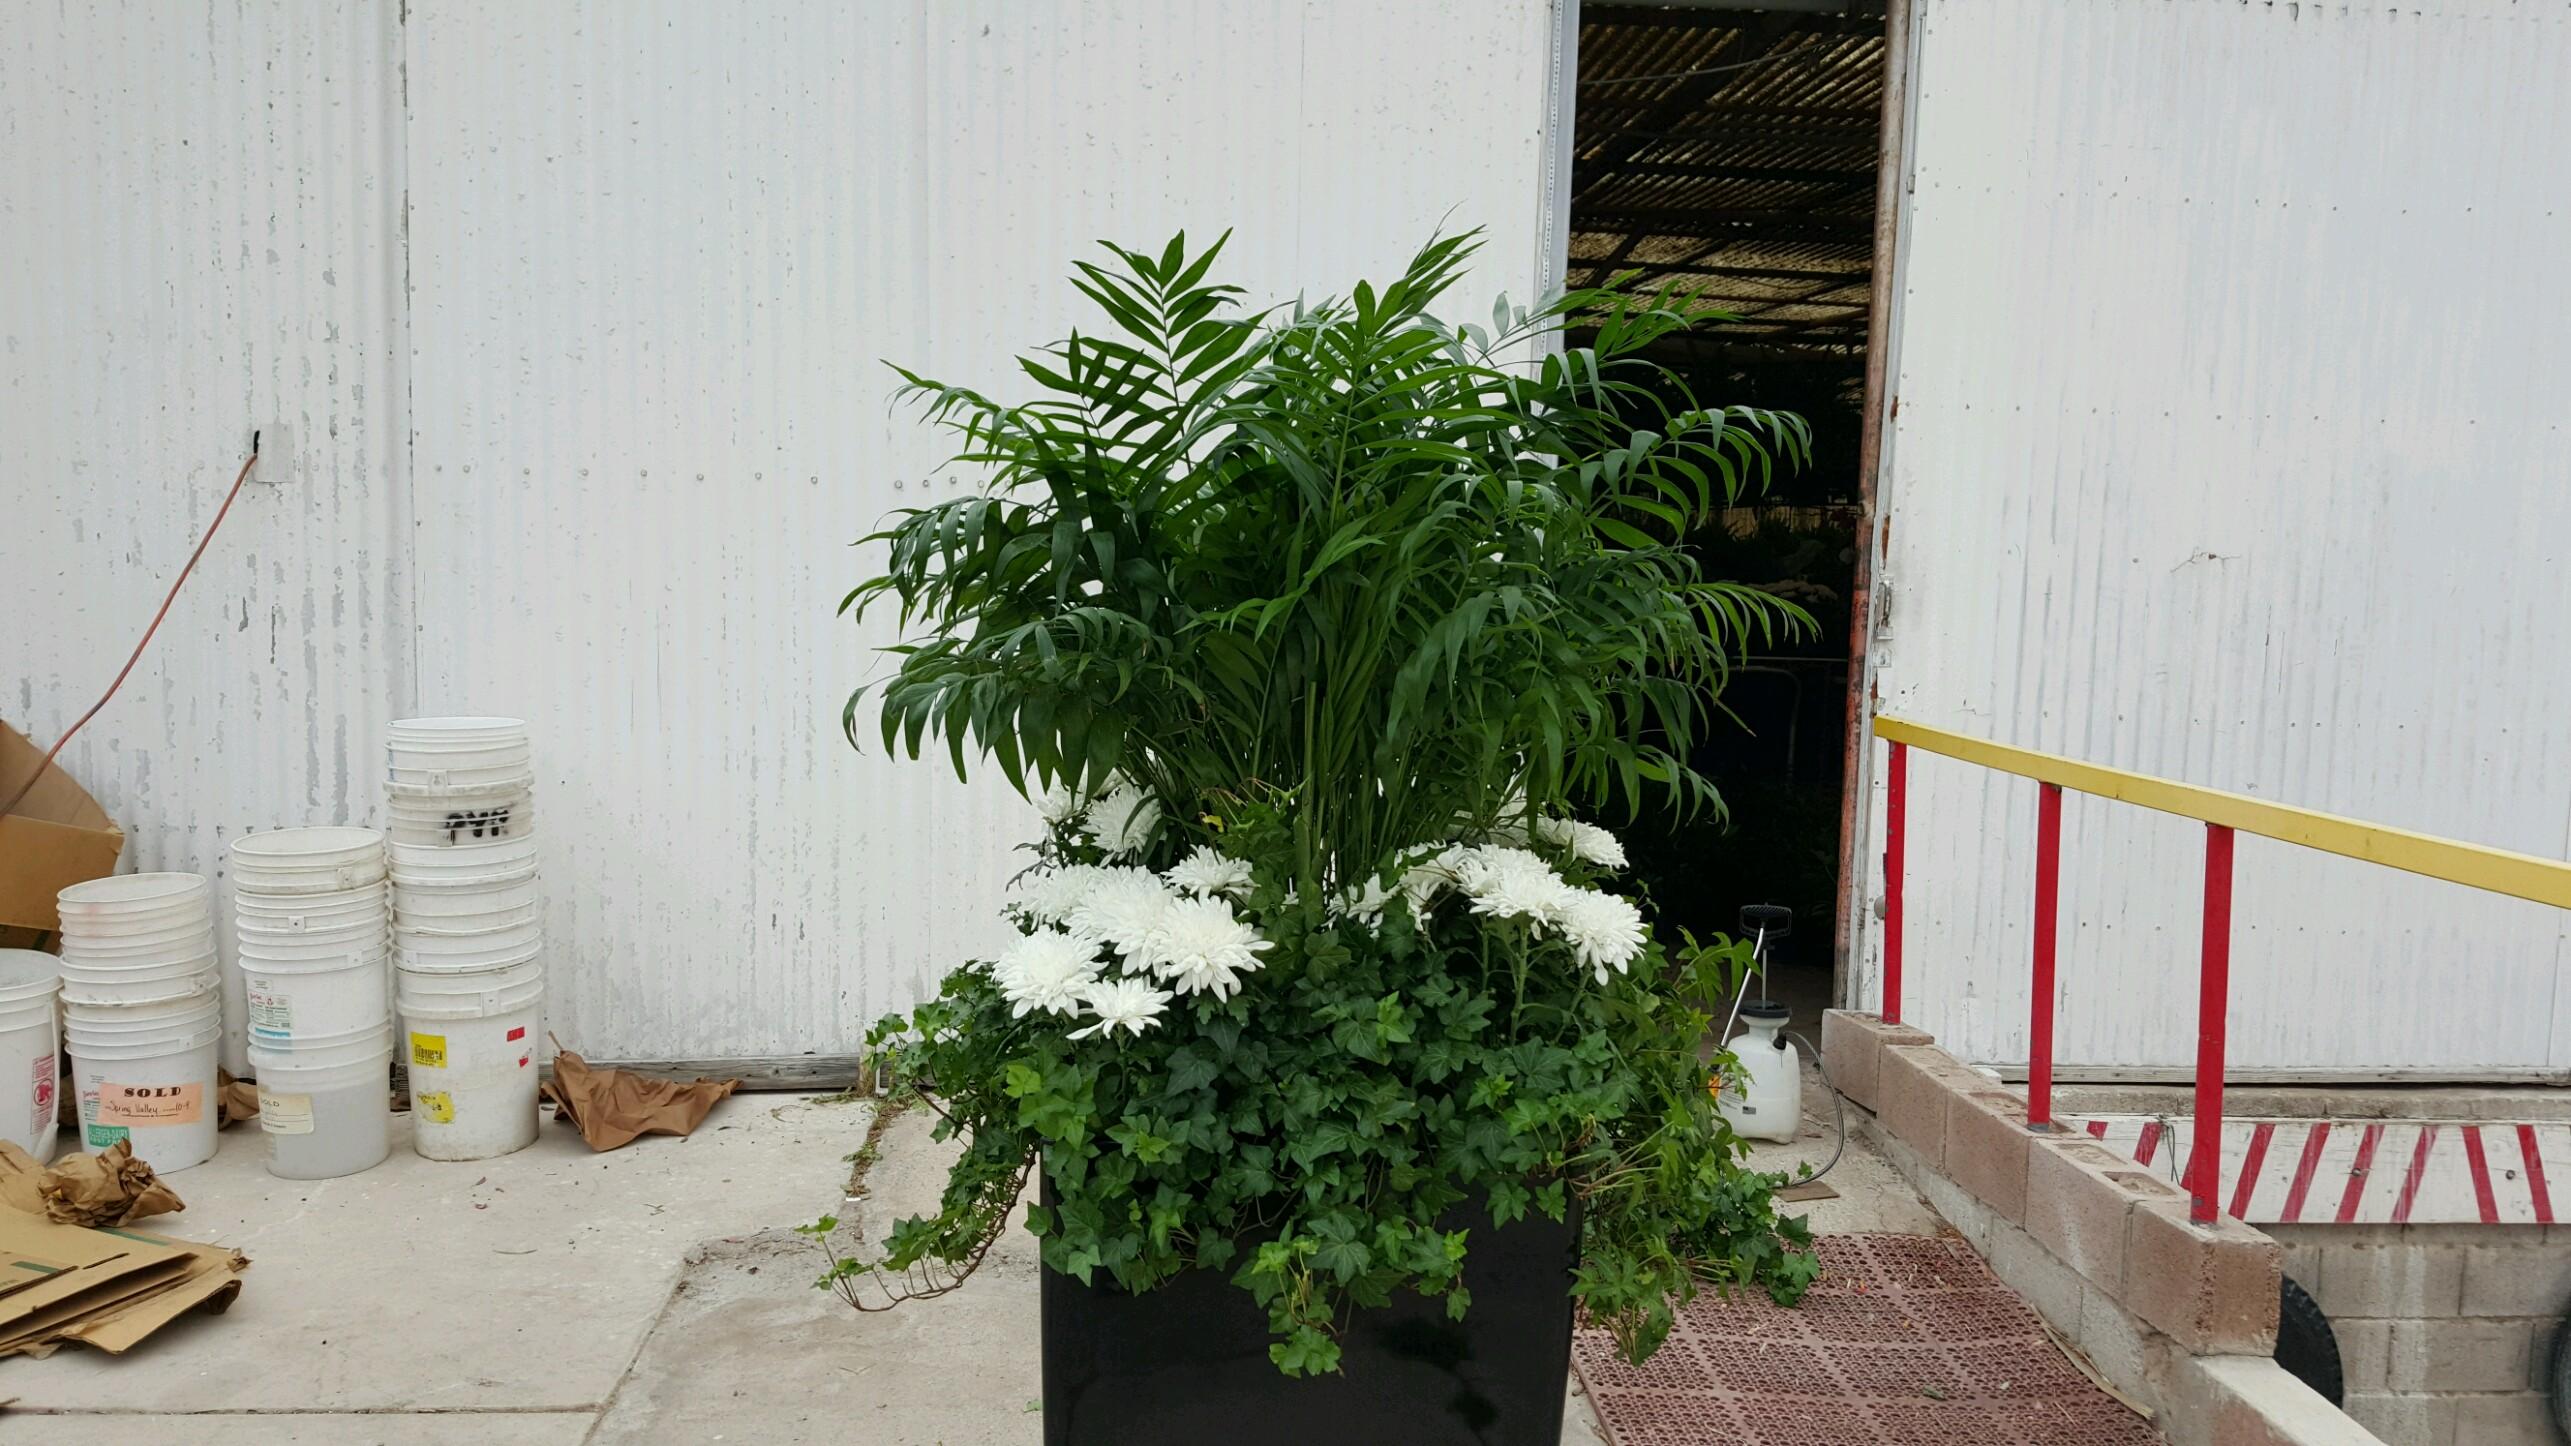 Medium sized potted plant